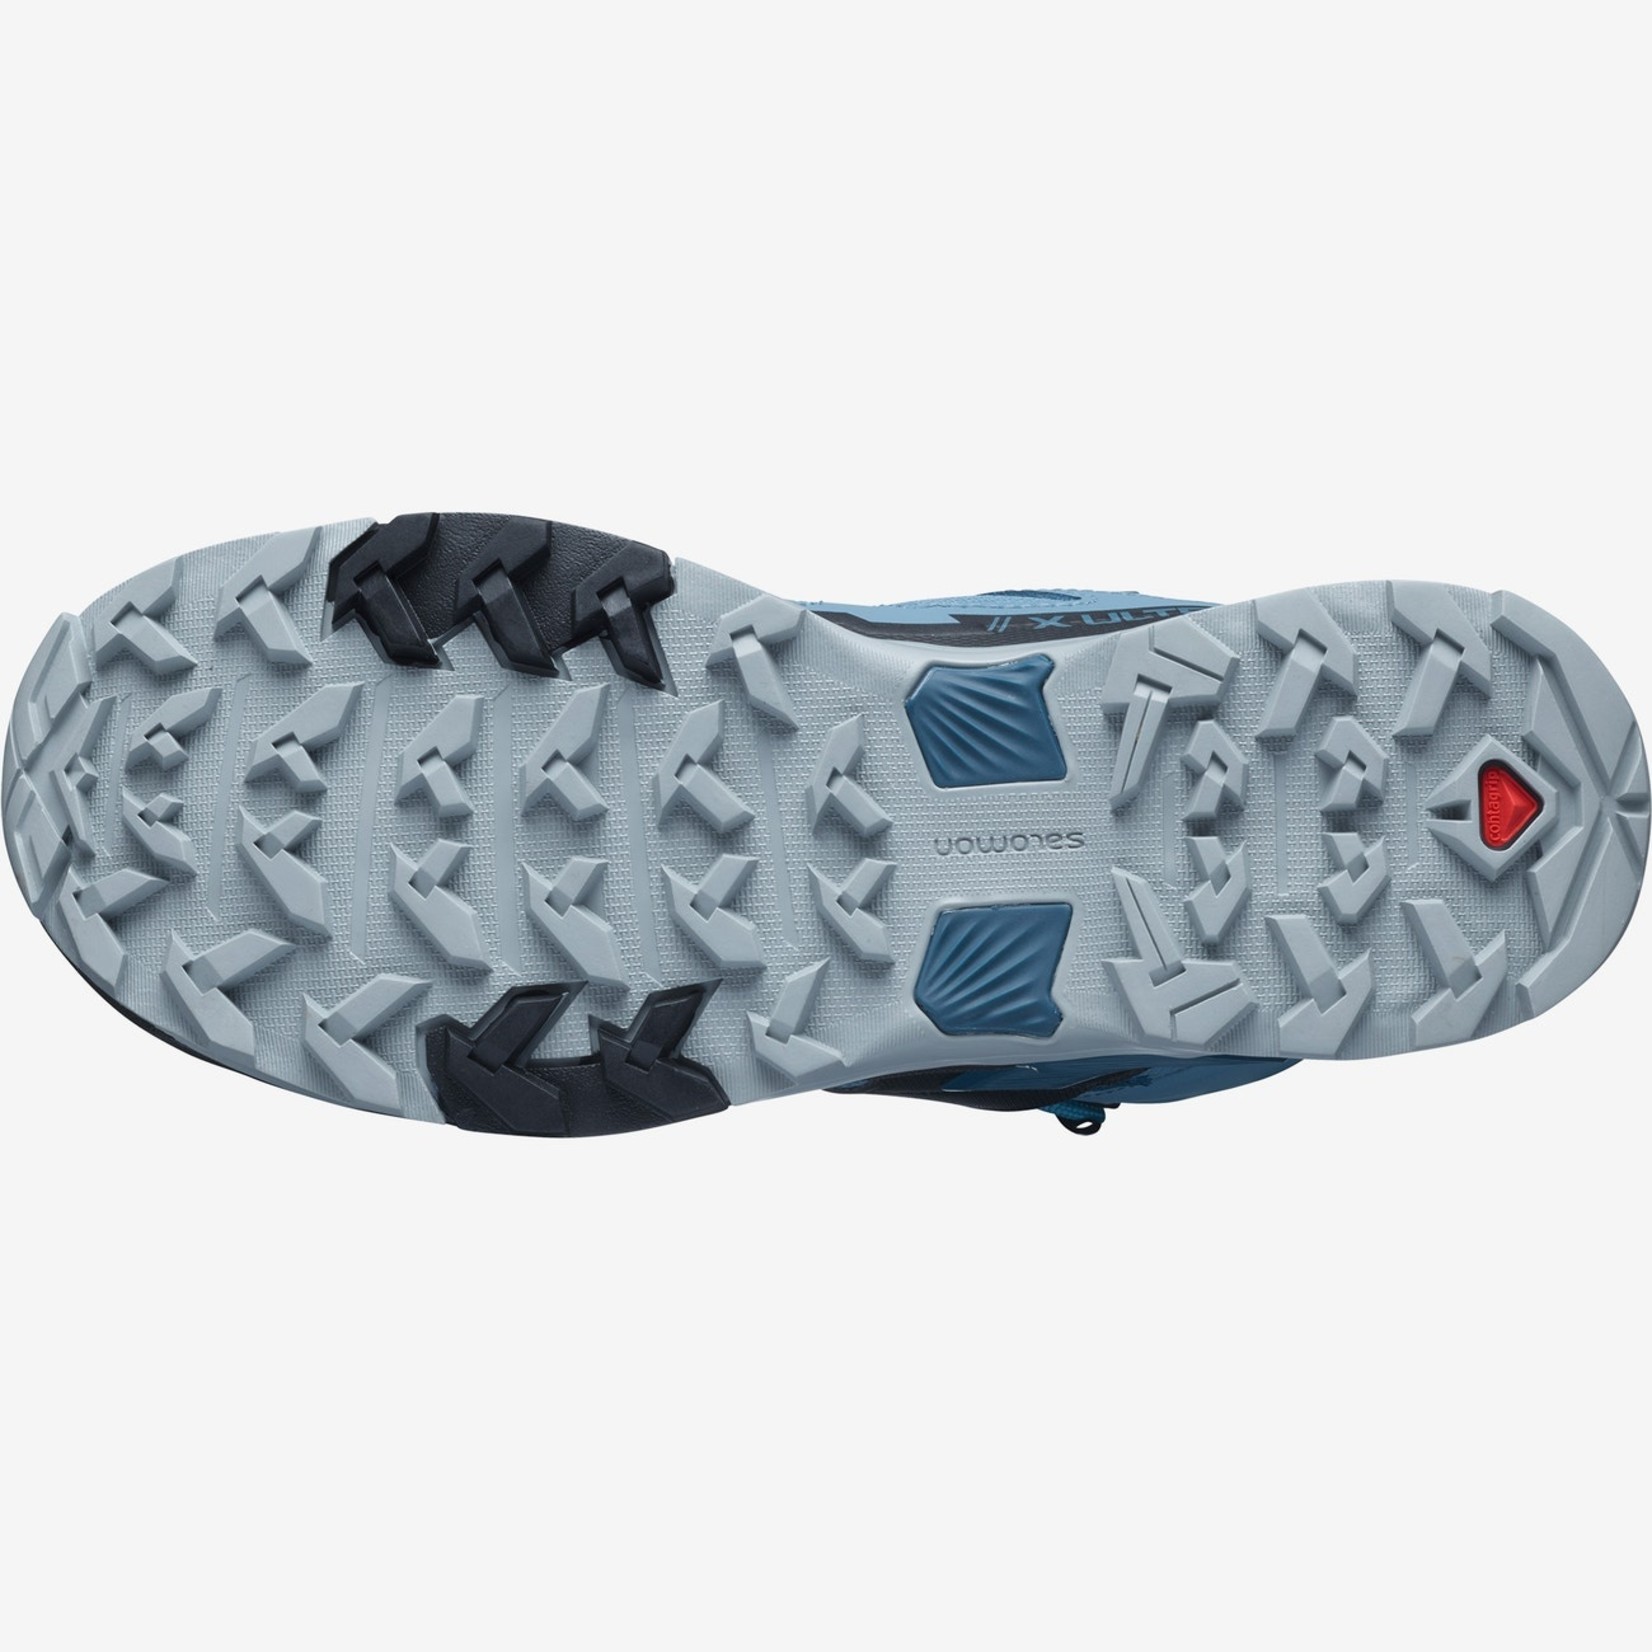 Salomon X Ultra 4 Mid GTX Women's Hiking Boot